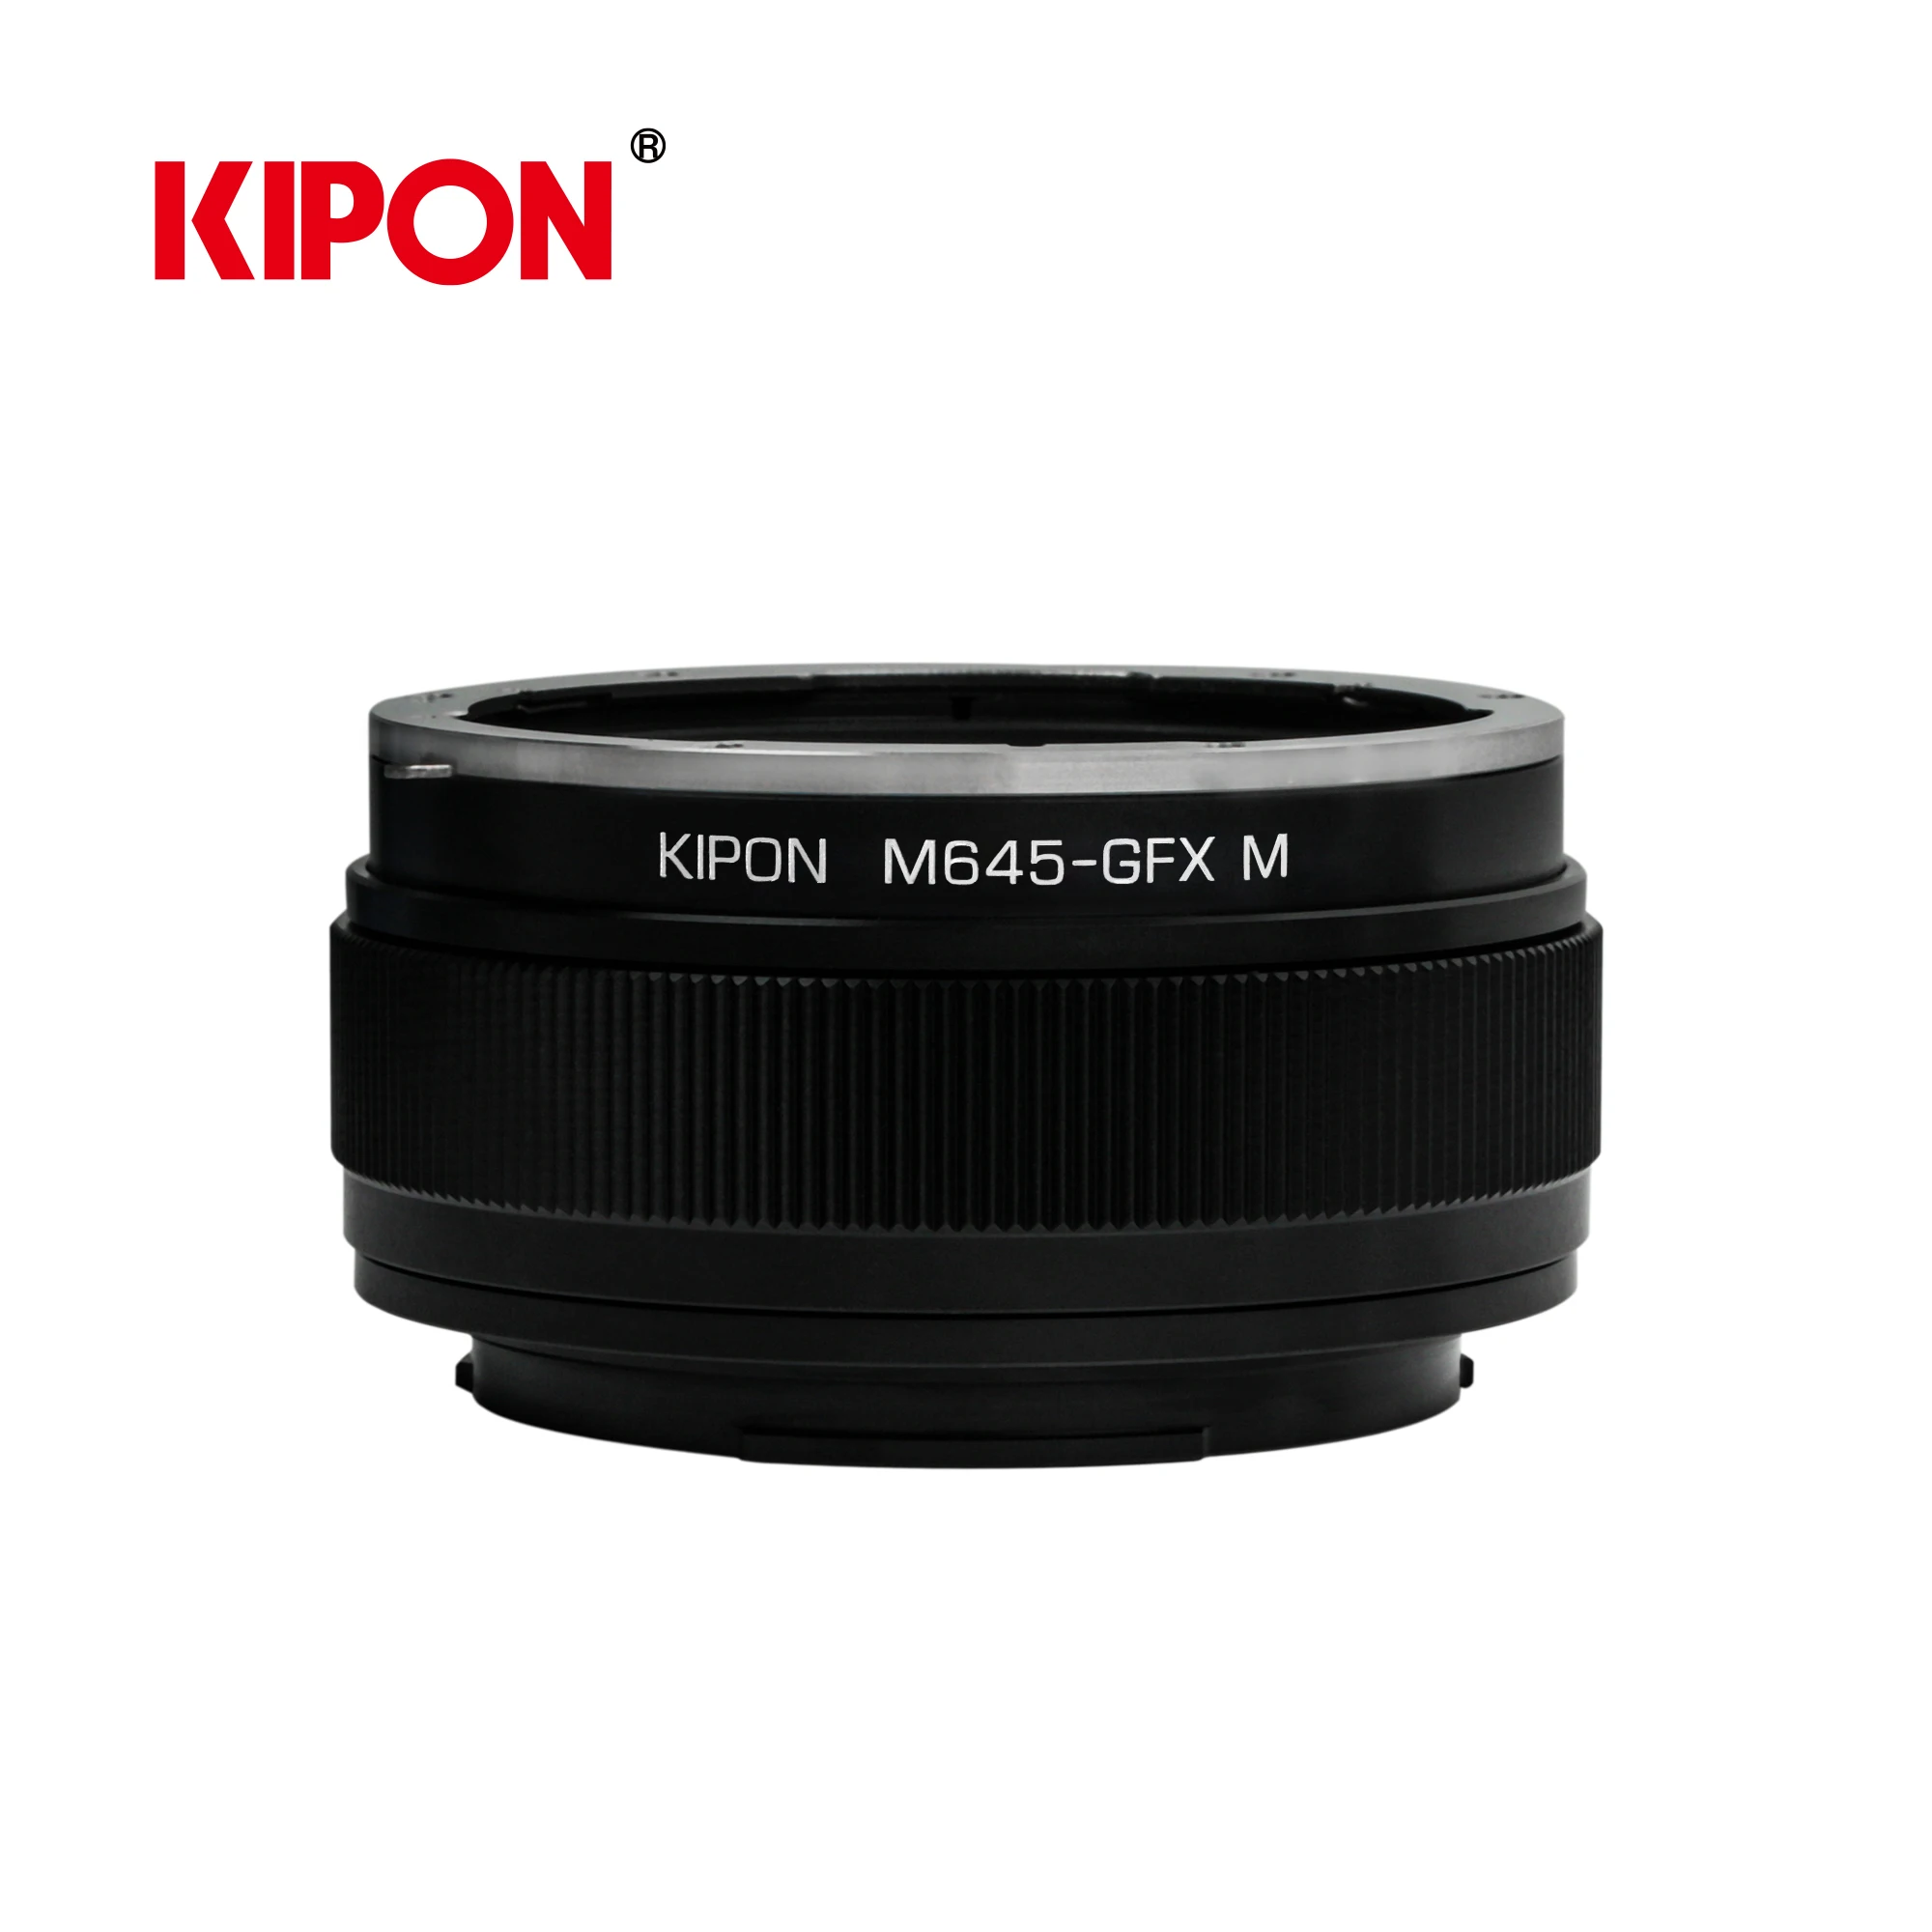 Адаптер KIPON M645-GFX M| Macro с геликоидом для объектива Mamiya M645 камеры Fujifilm GFX